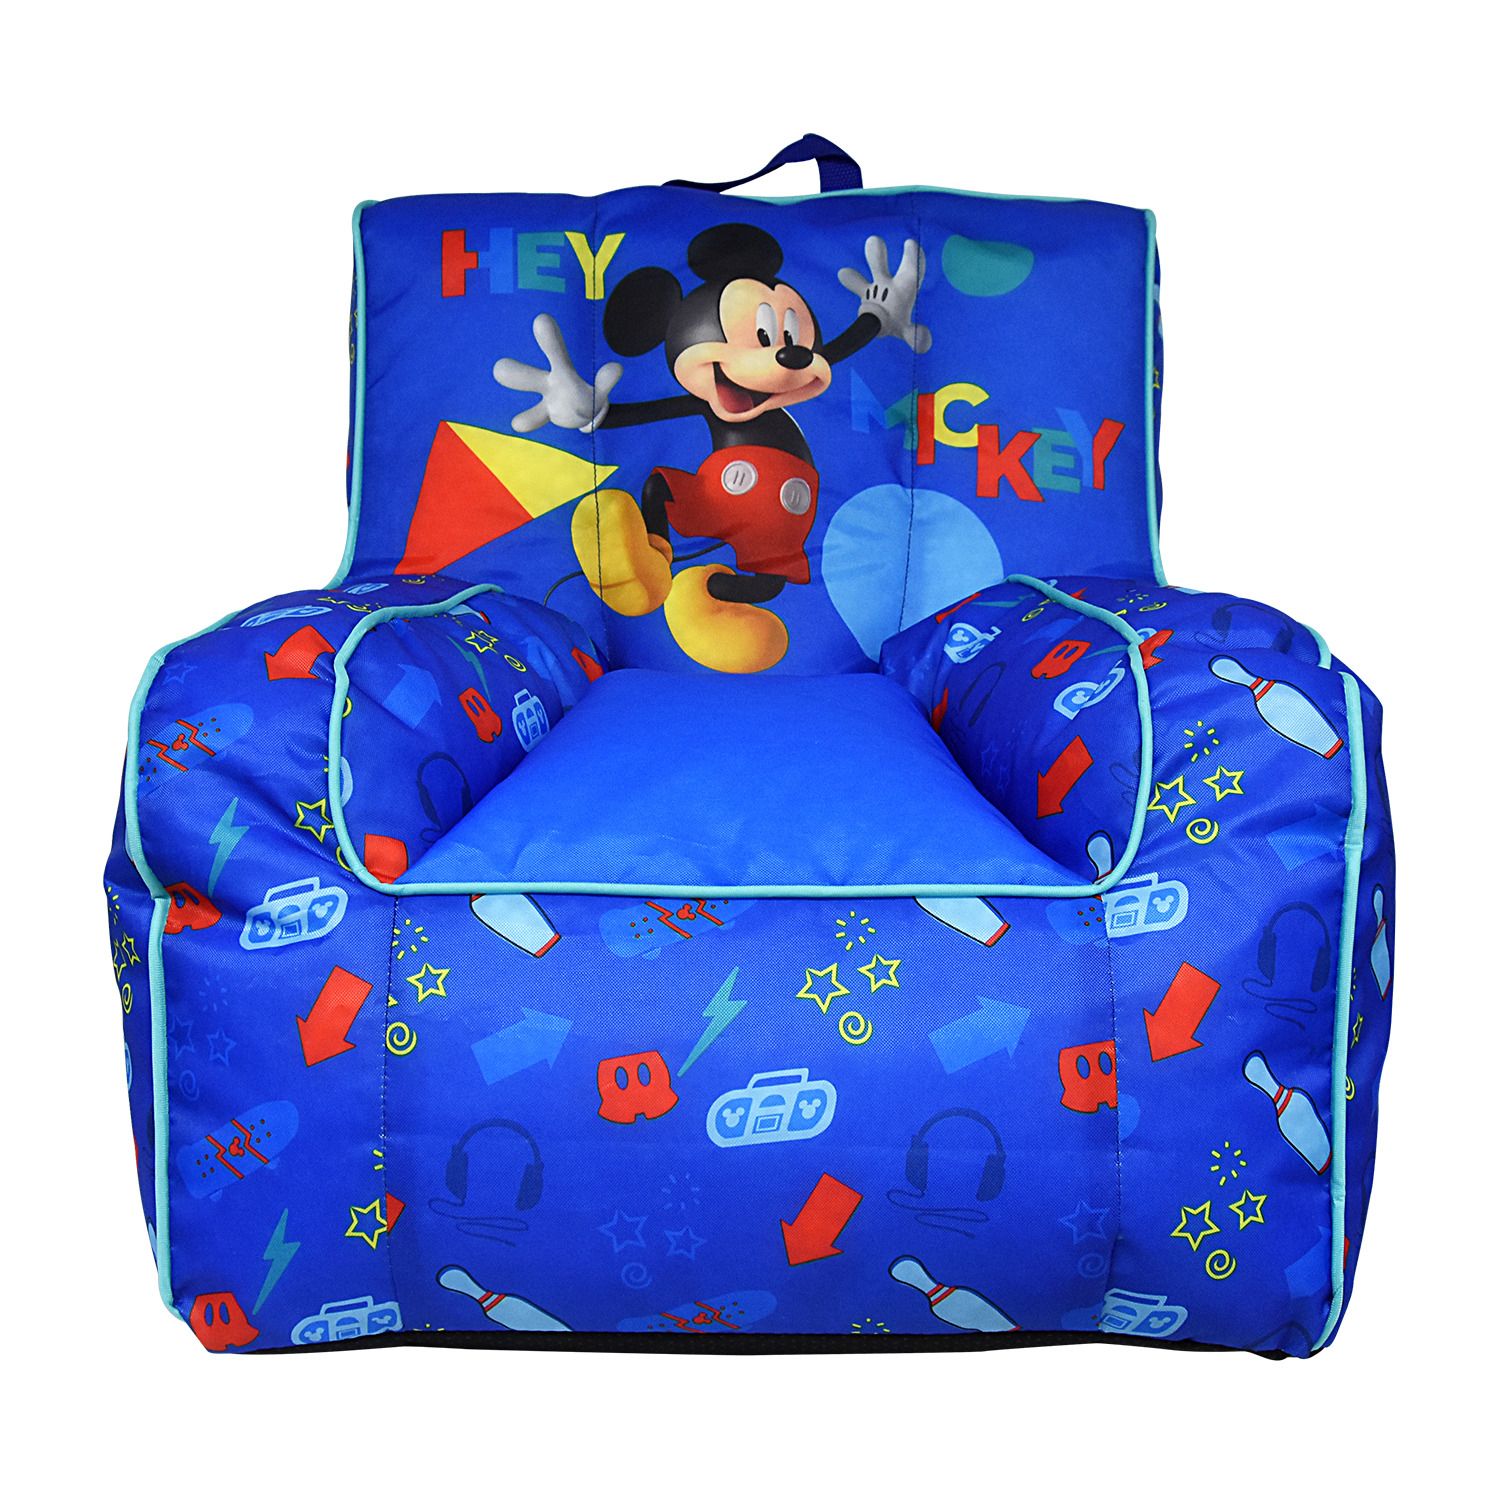 mickey mouse bean bag chair